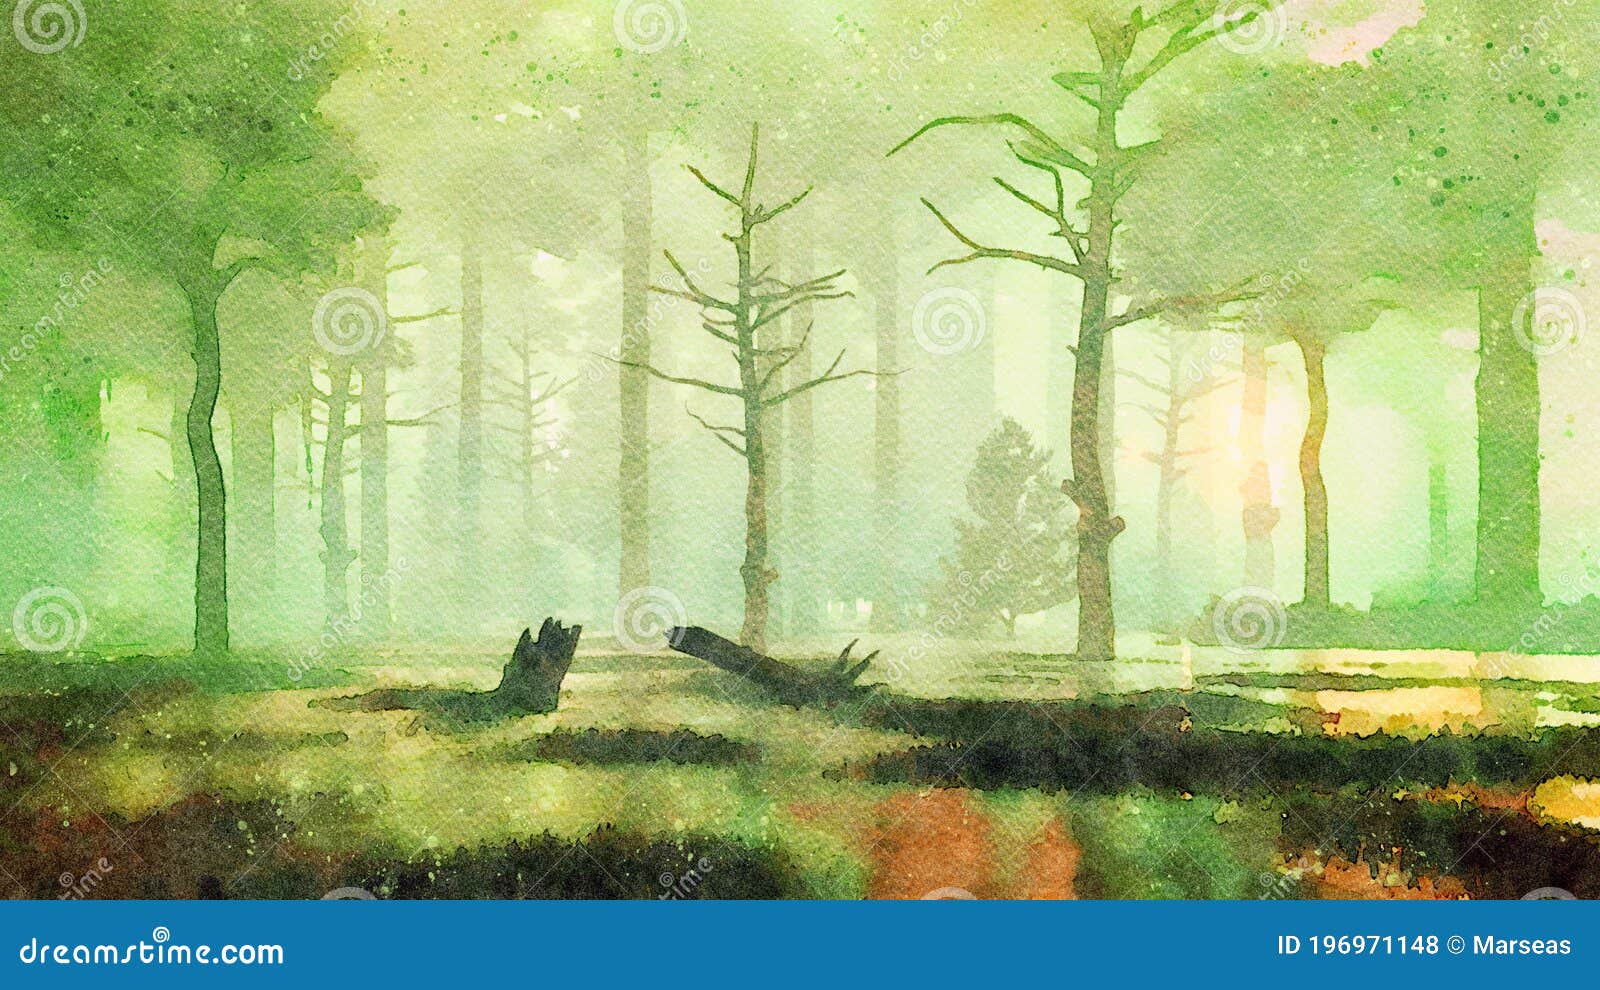 sunset in dark swampy forest watercolor landscape